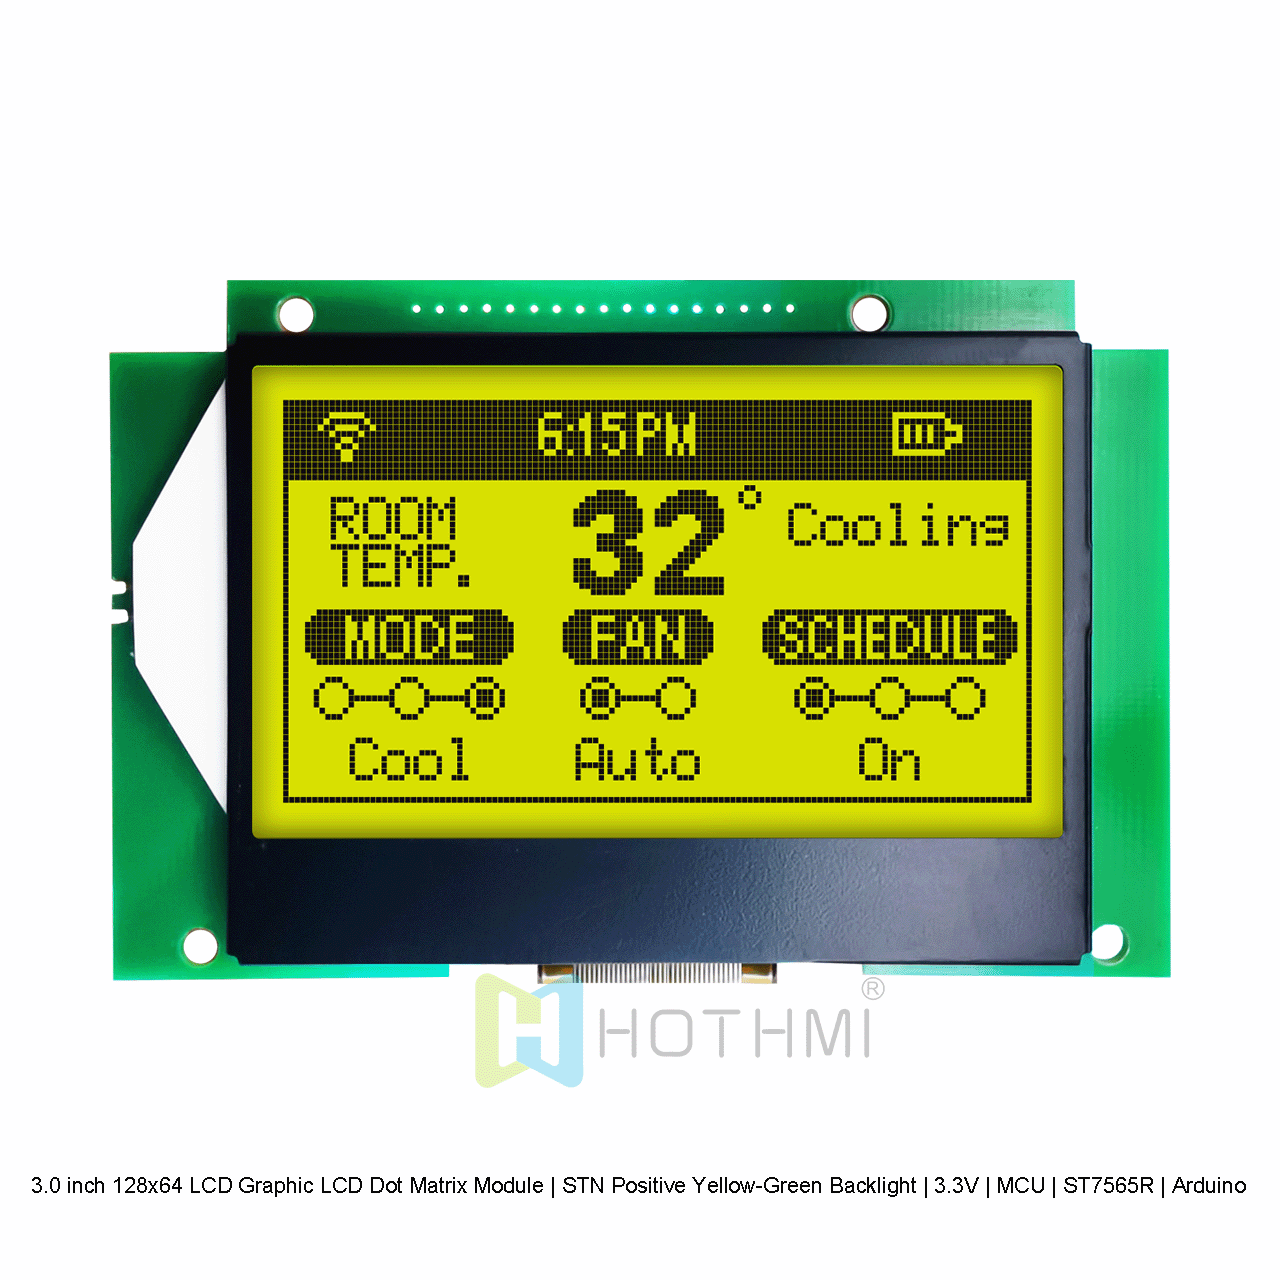 3.0 inch 128x64 LCD Graphic LCD Dot Matrix Module | STN Positive Yellow-Green Backlight | 3.3V | MCU | ST7565R | Arduino